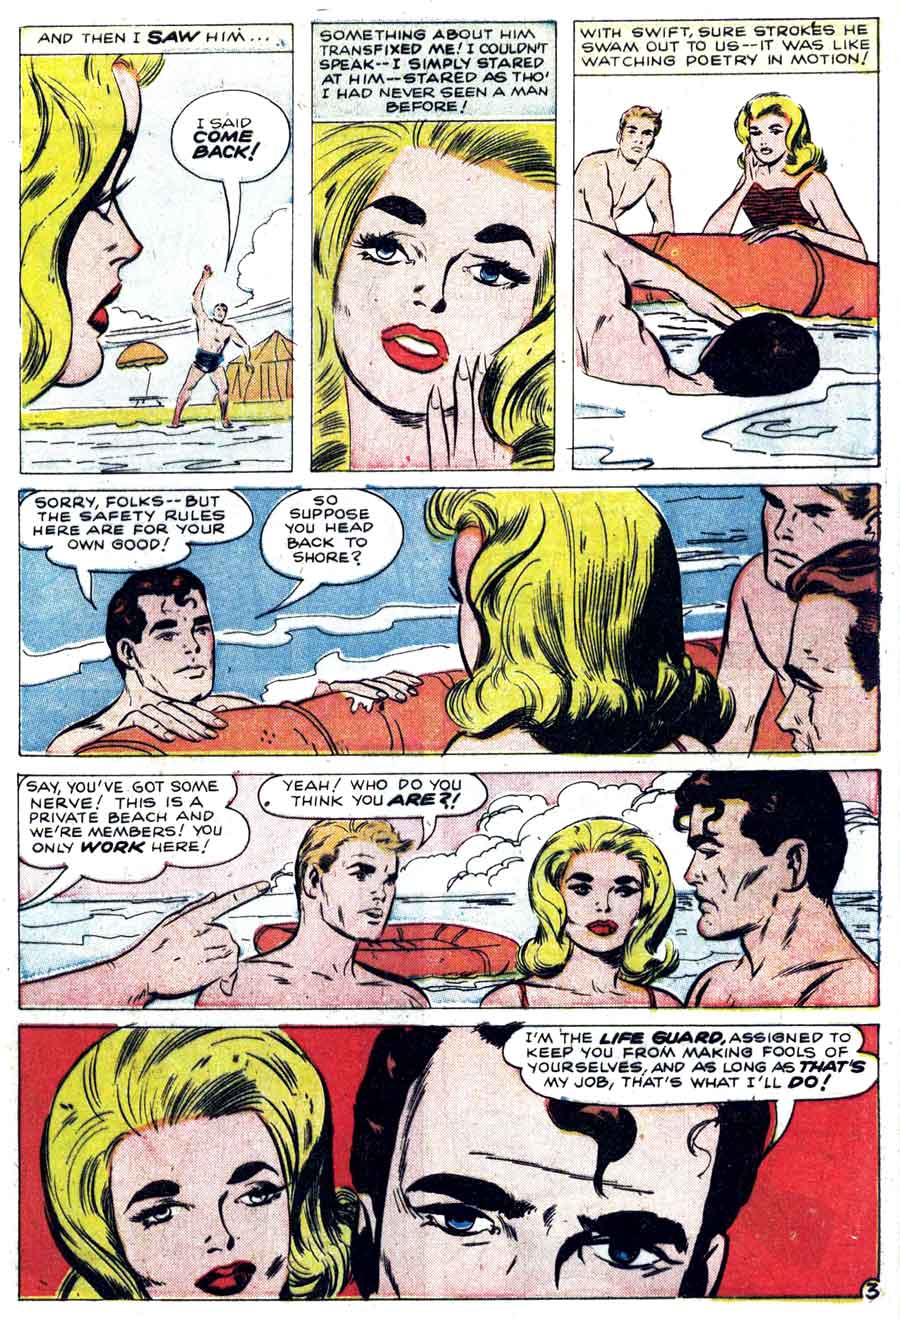 Teen-age Romance #84 atlas 1960s silver age romance comic book page art by Jack Kirby